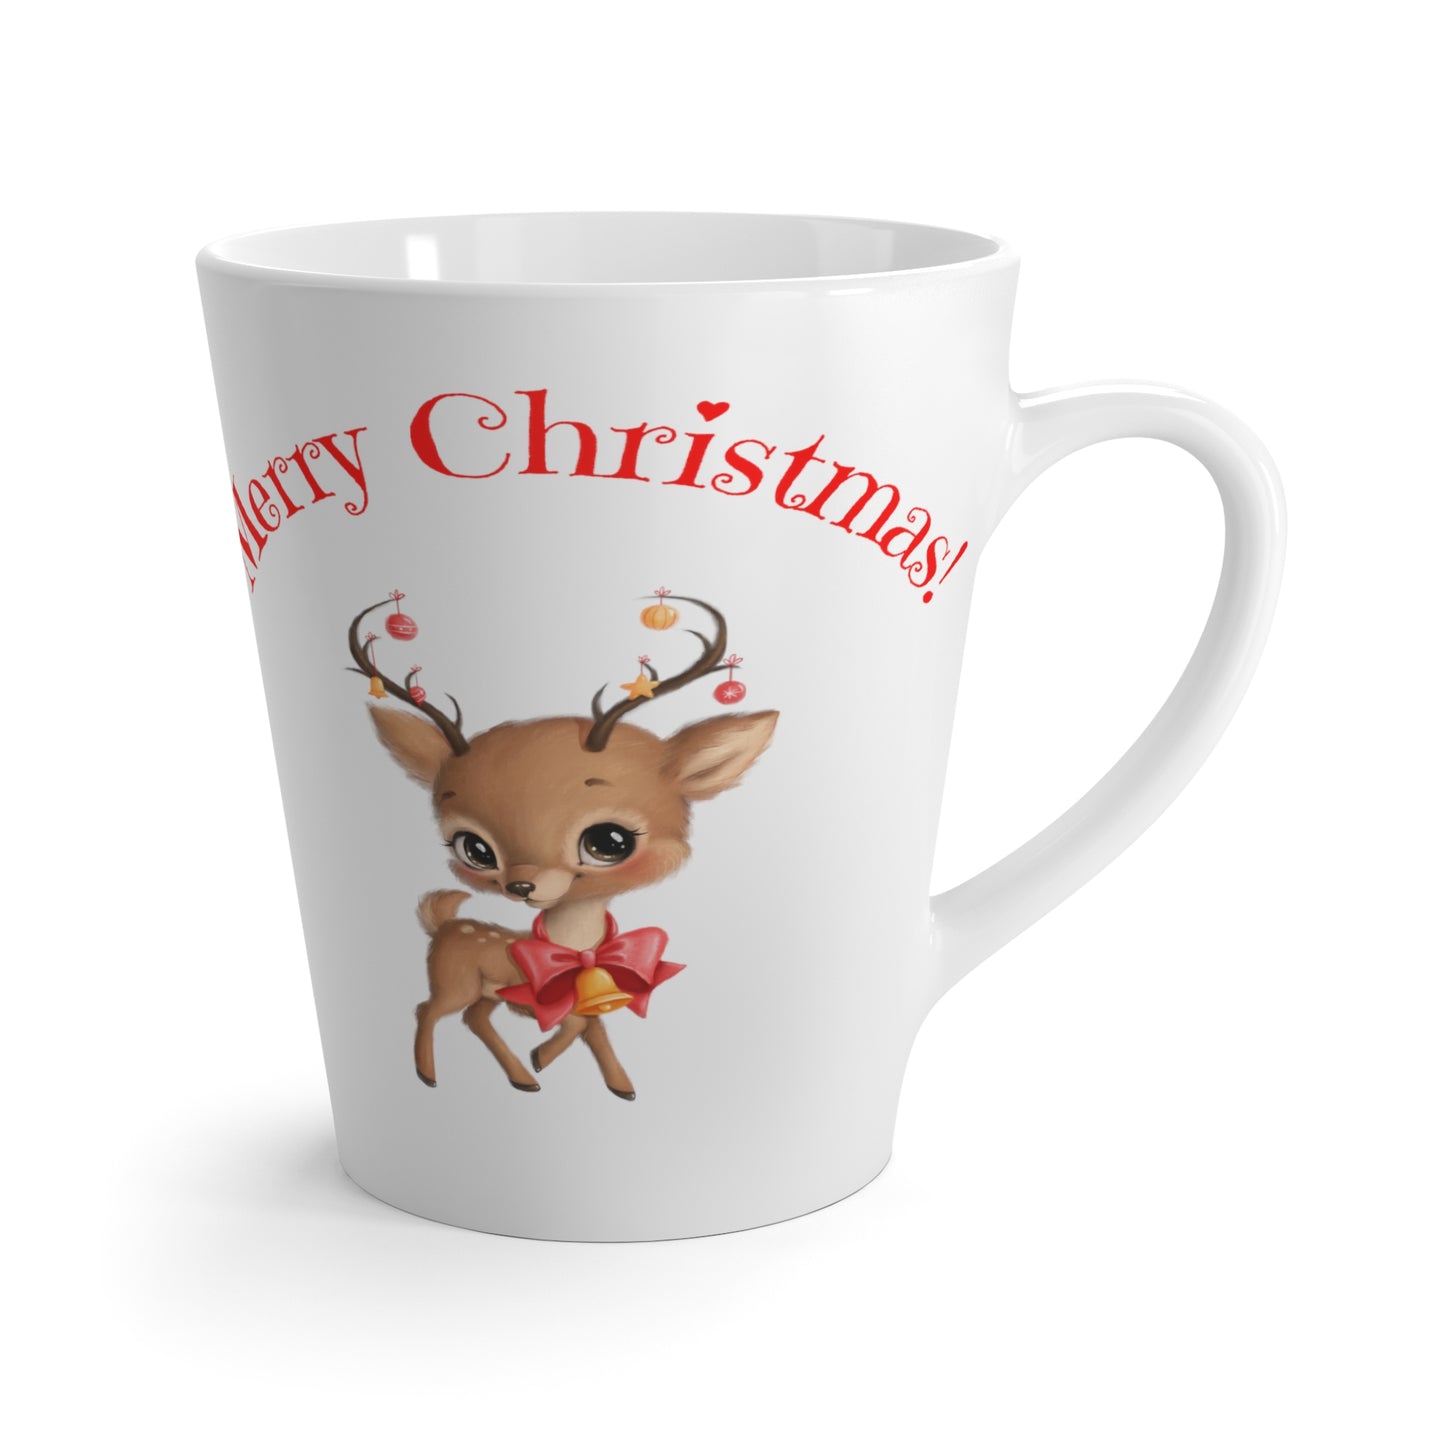 Merry Christmas Theme Latte Ceramic Mug, 12oz